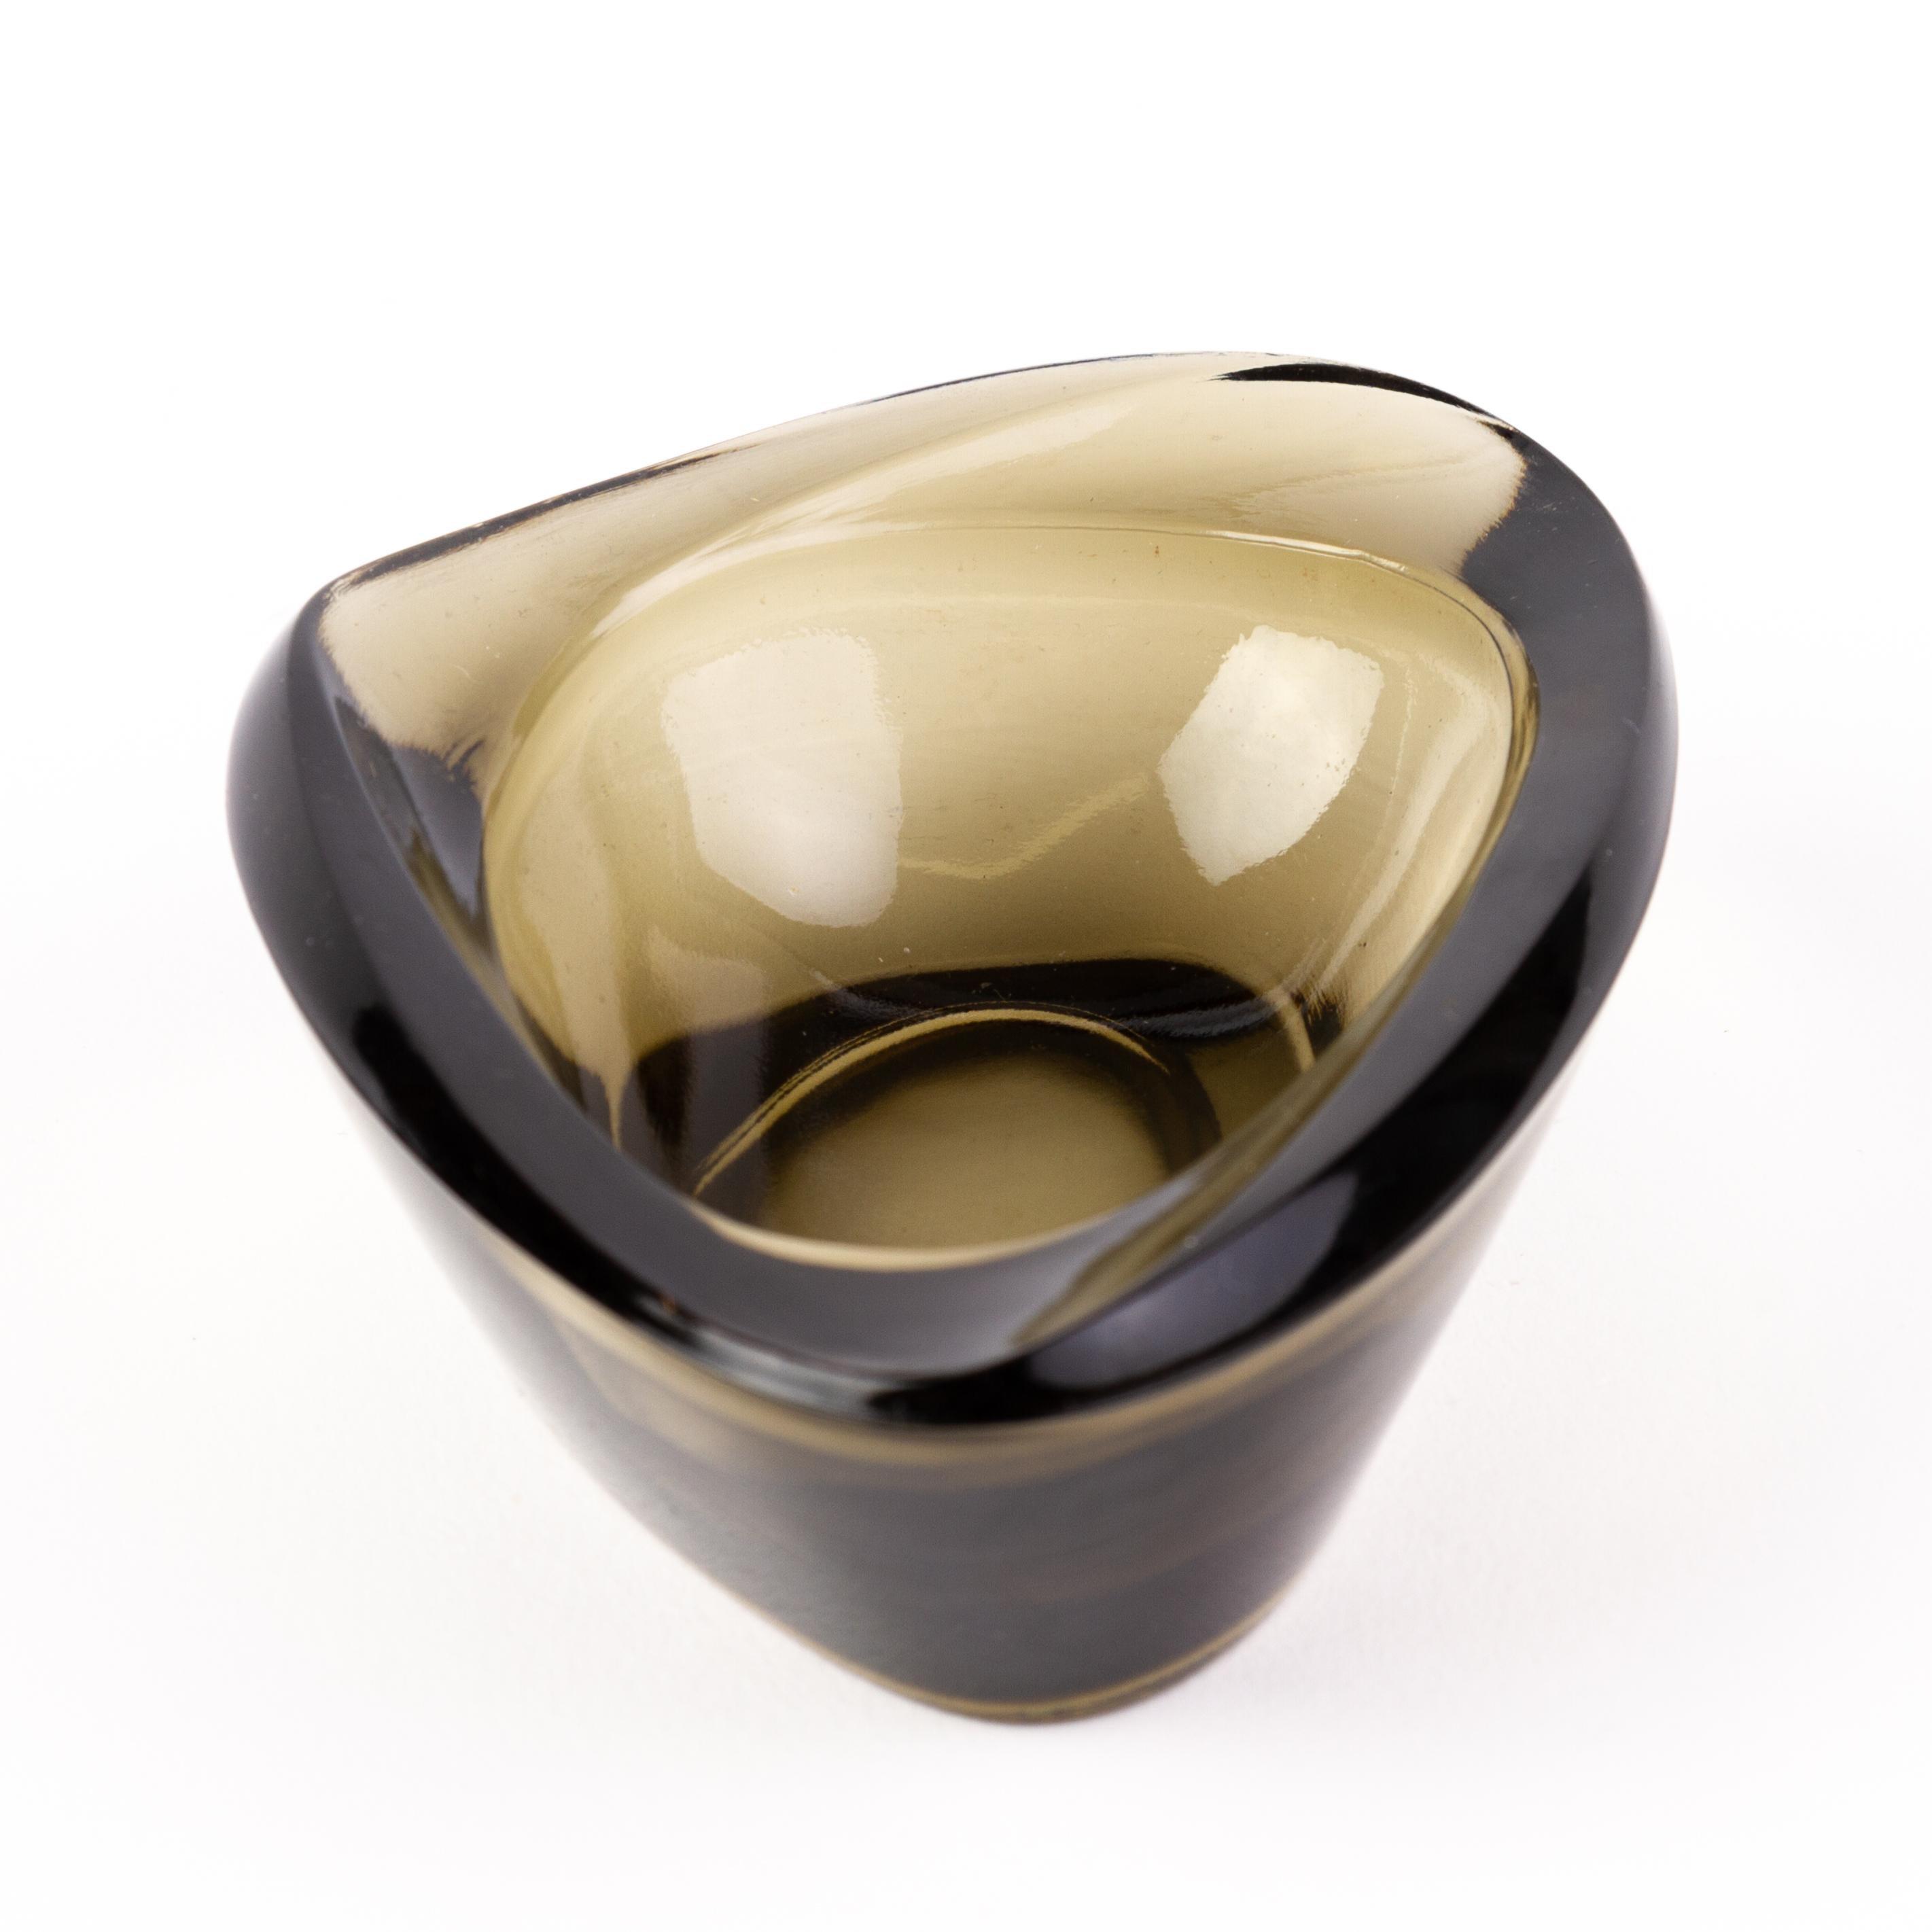 Murano Venetian Glass Sommerso Ashtray Bowl 
Good condition
Free international shipping.